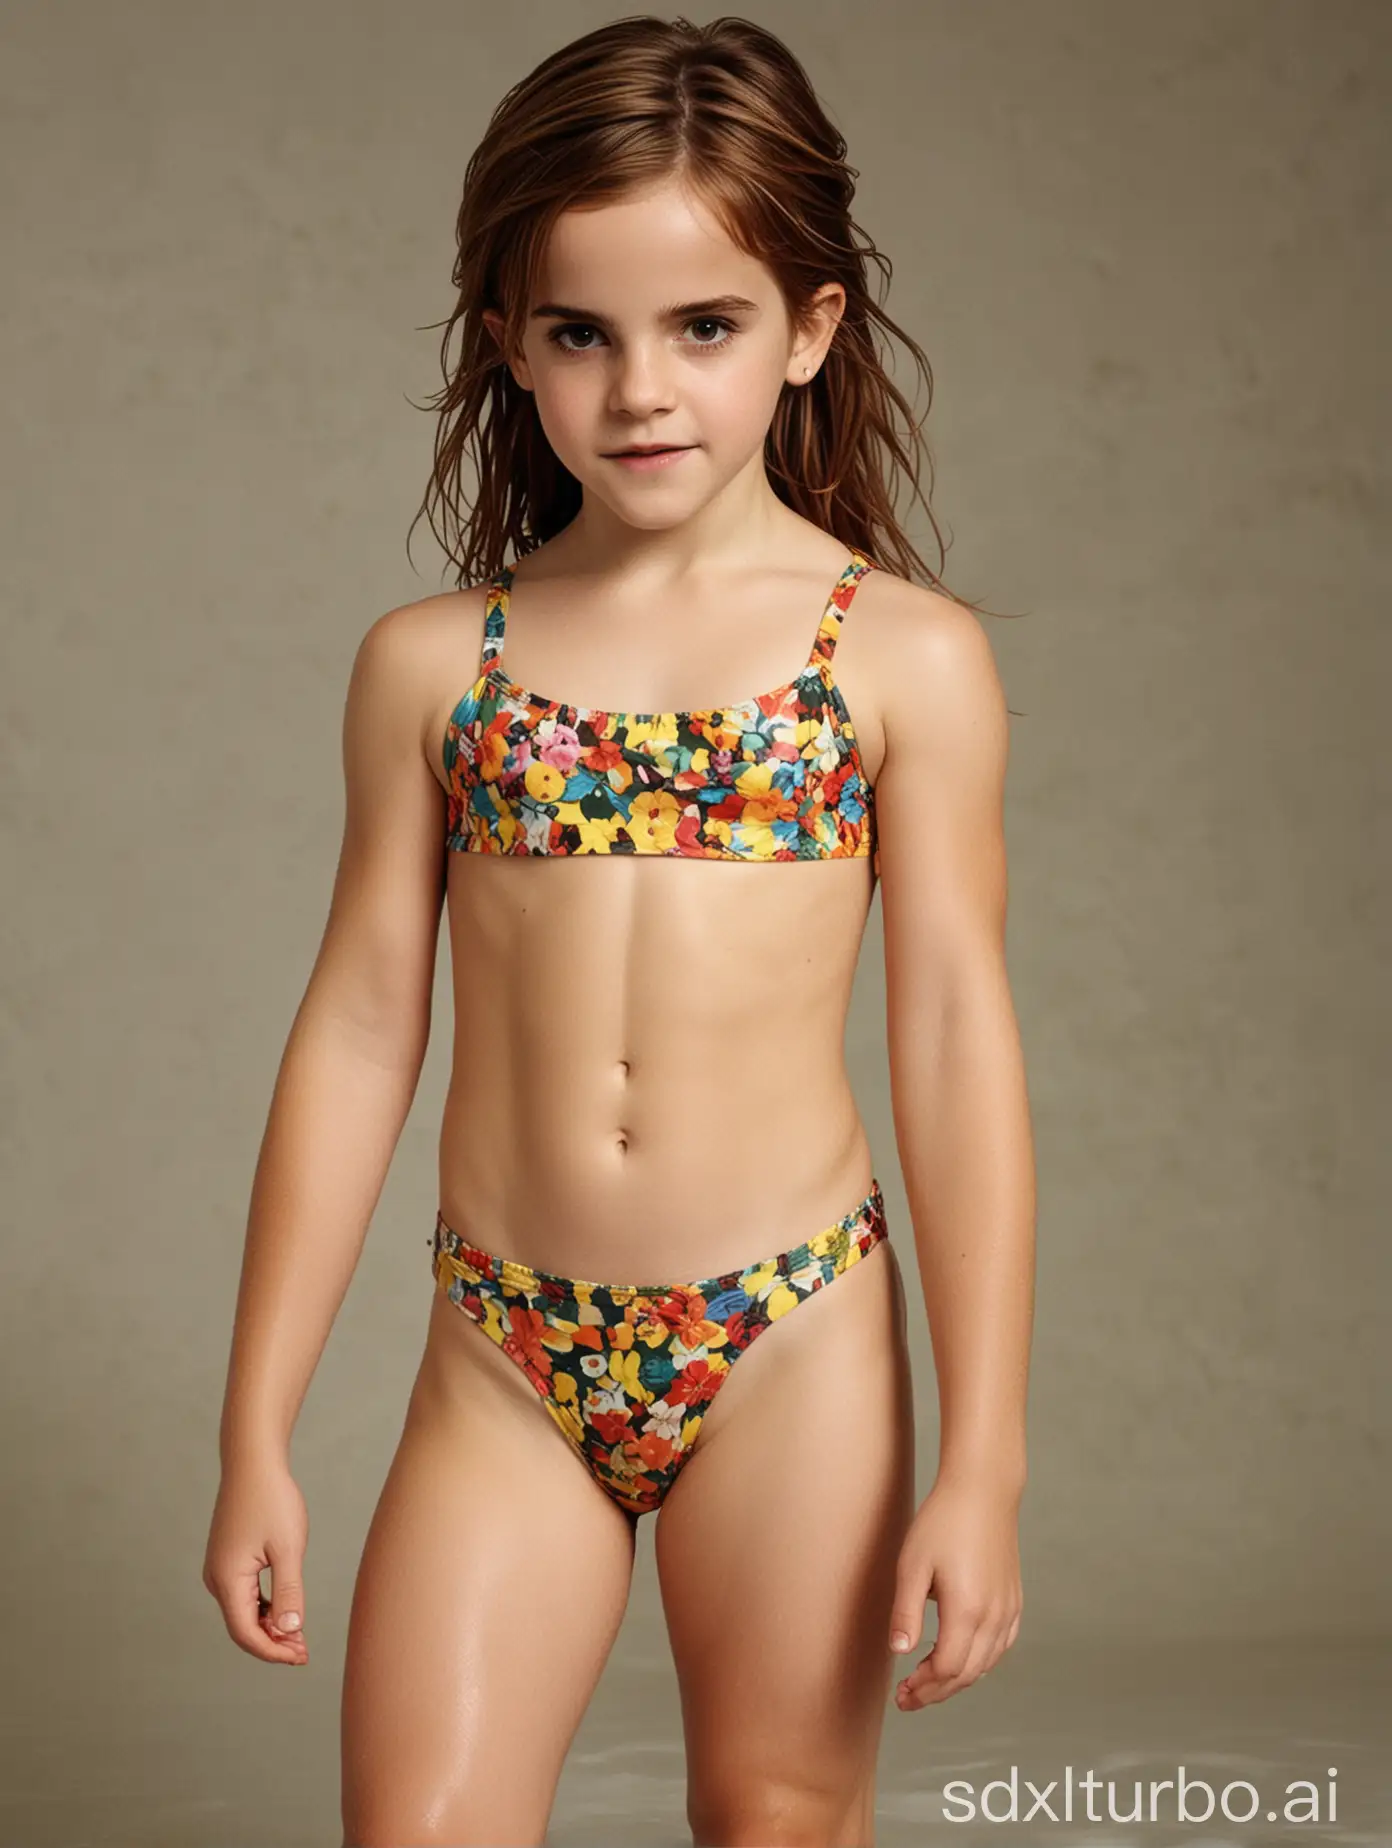 Emma Watson at 6 years old, long hair, very muscular abs, bathingsuit